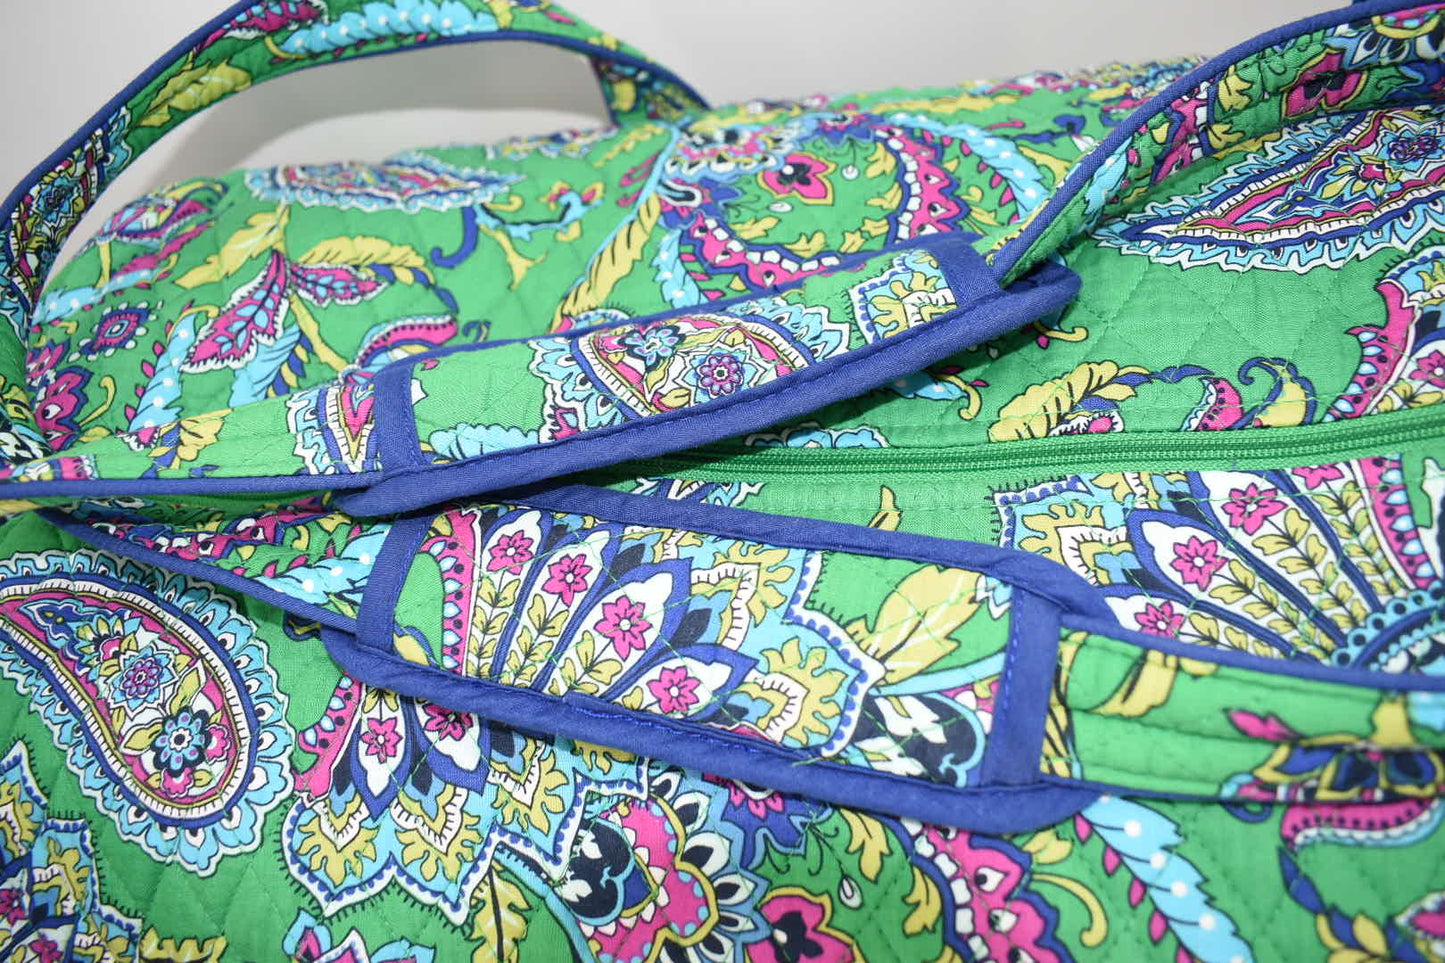 Vera Bradley XL Duffel Bag in "Emerald Paisley" Pattern